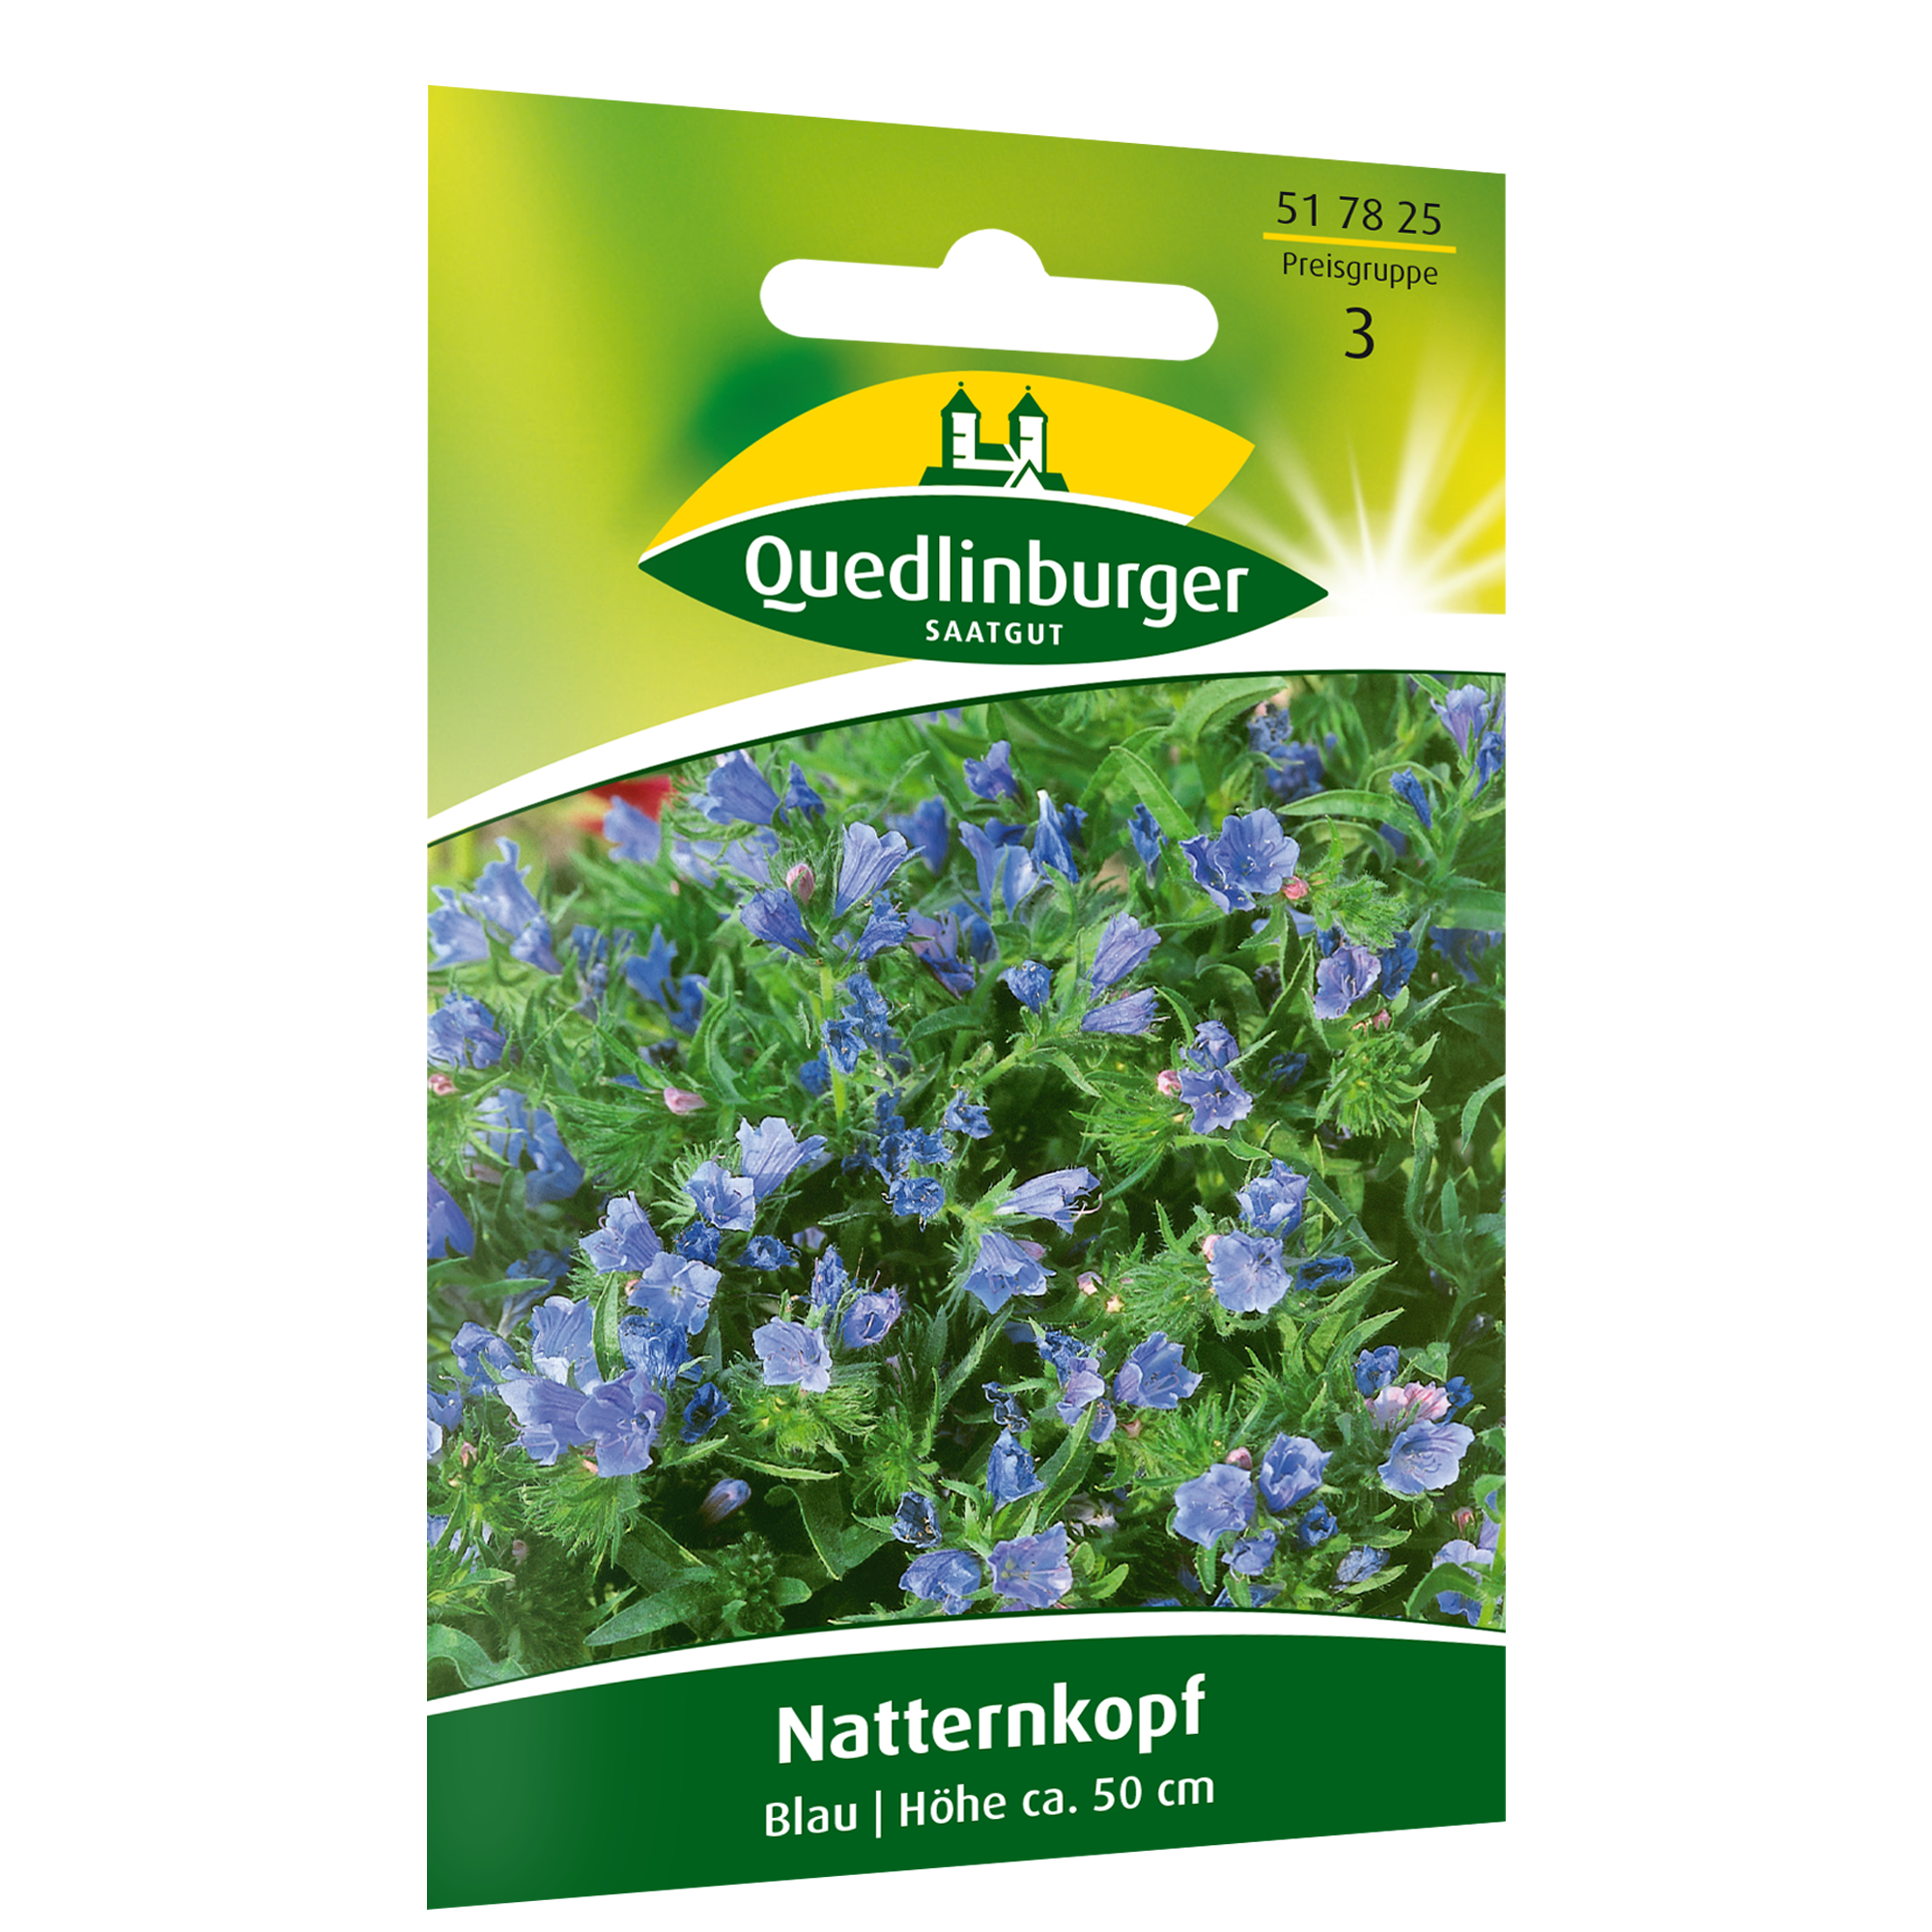 Natternkopf blau + product picture